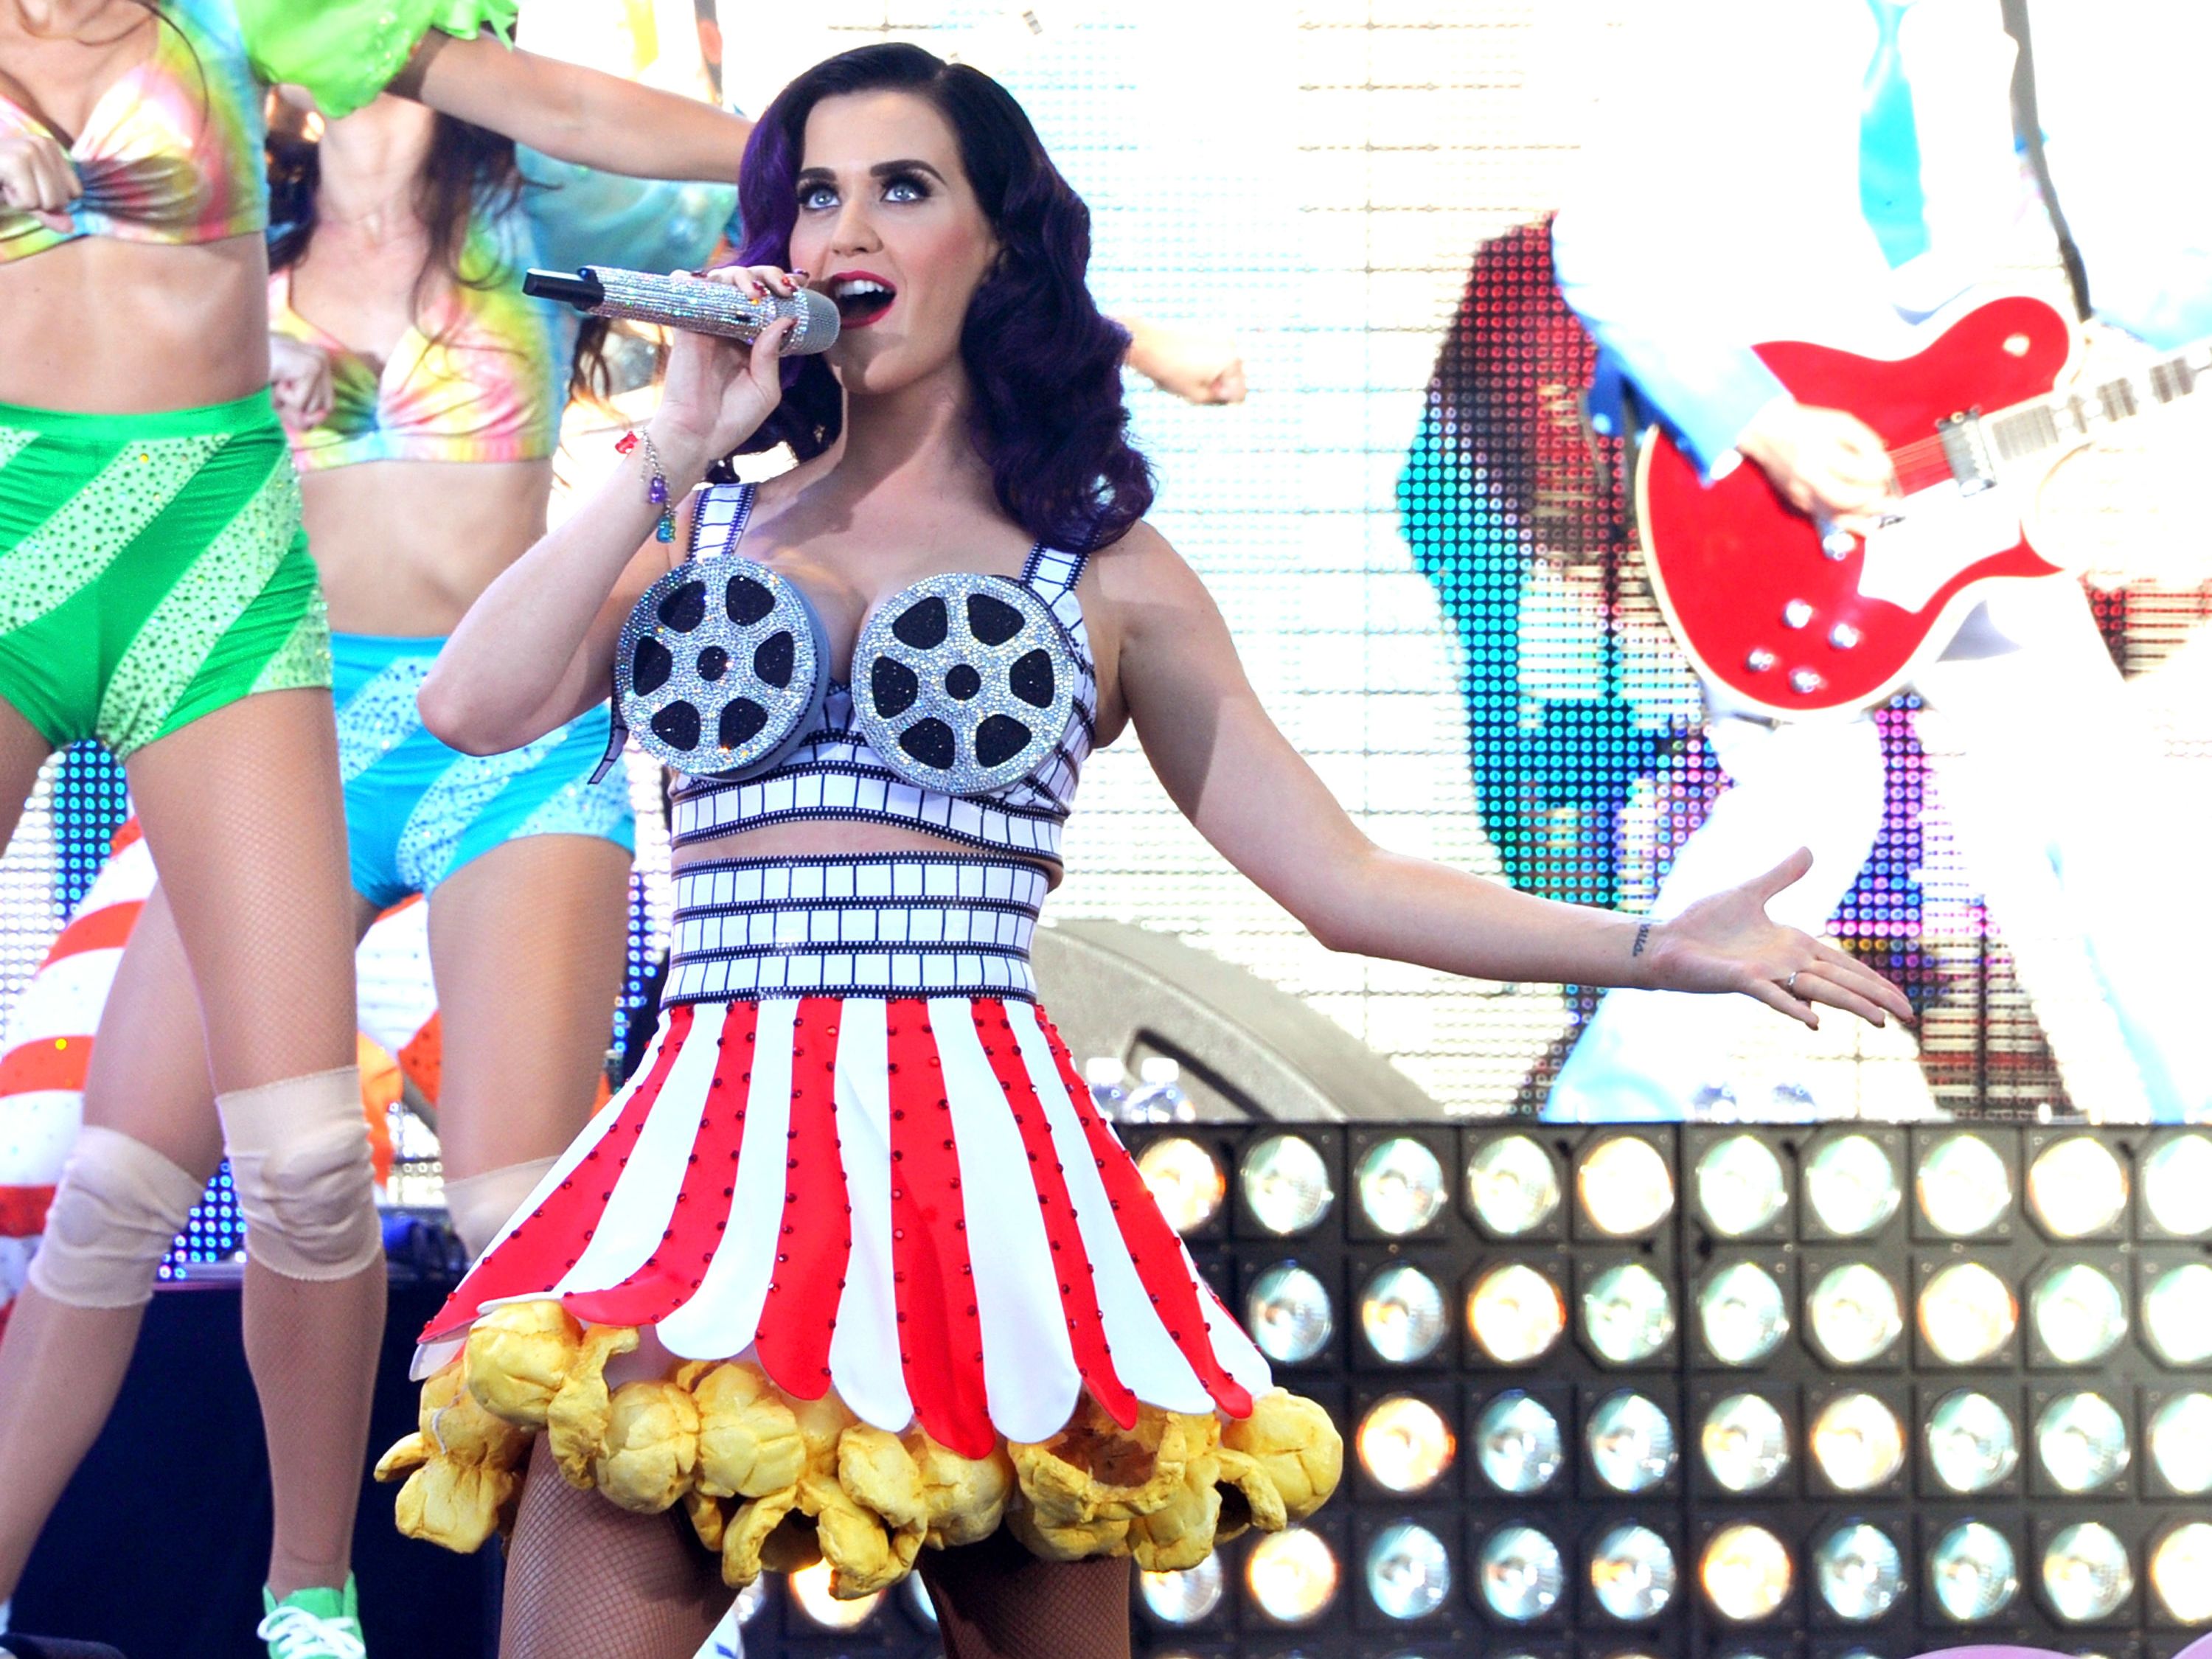 Katy Perry's bra-mazing outfits | CNN